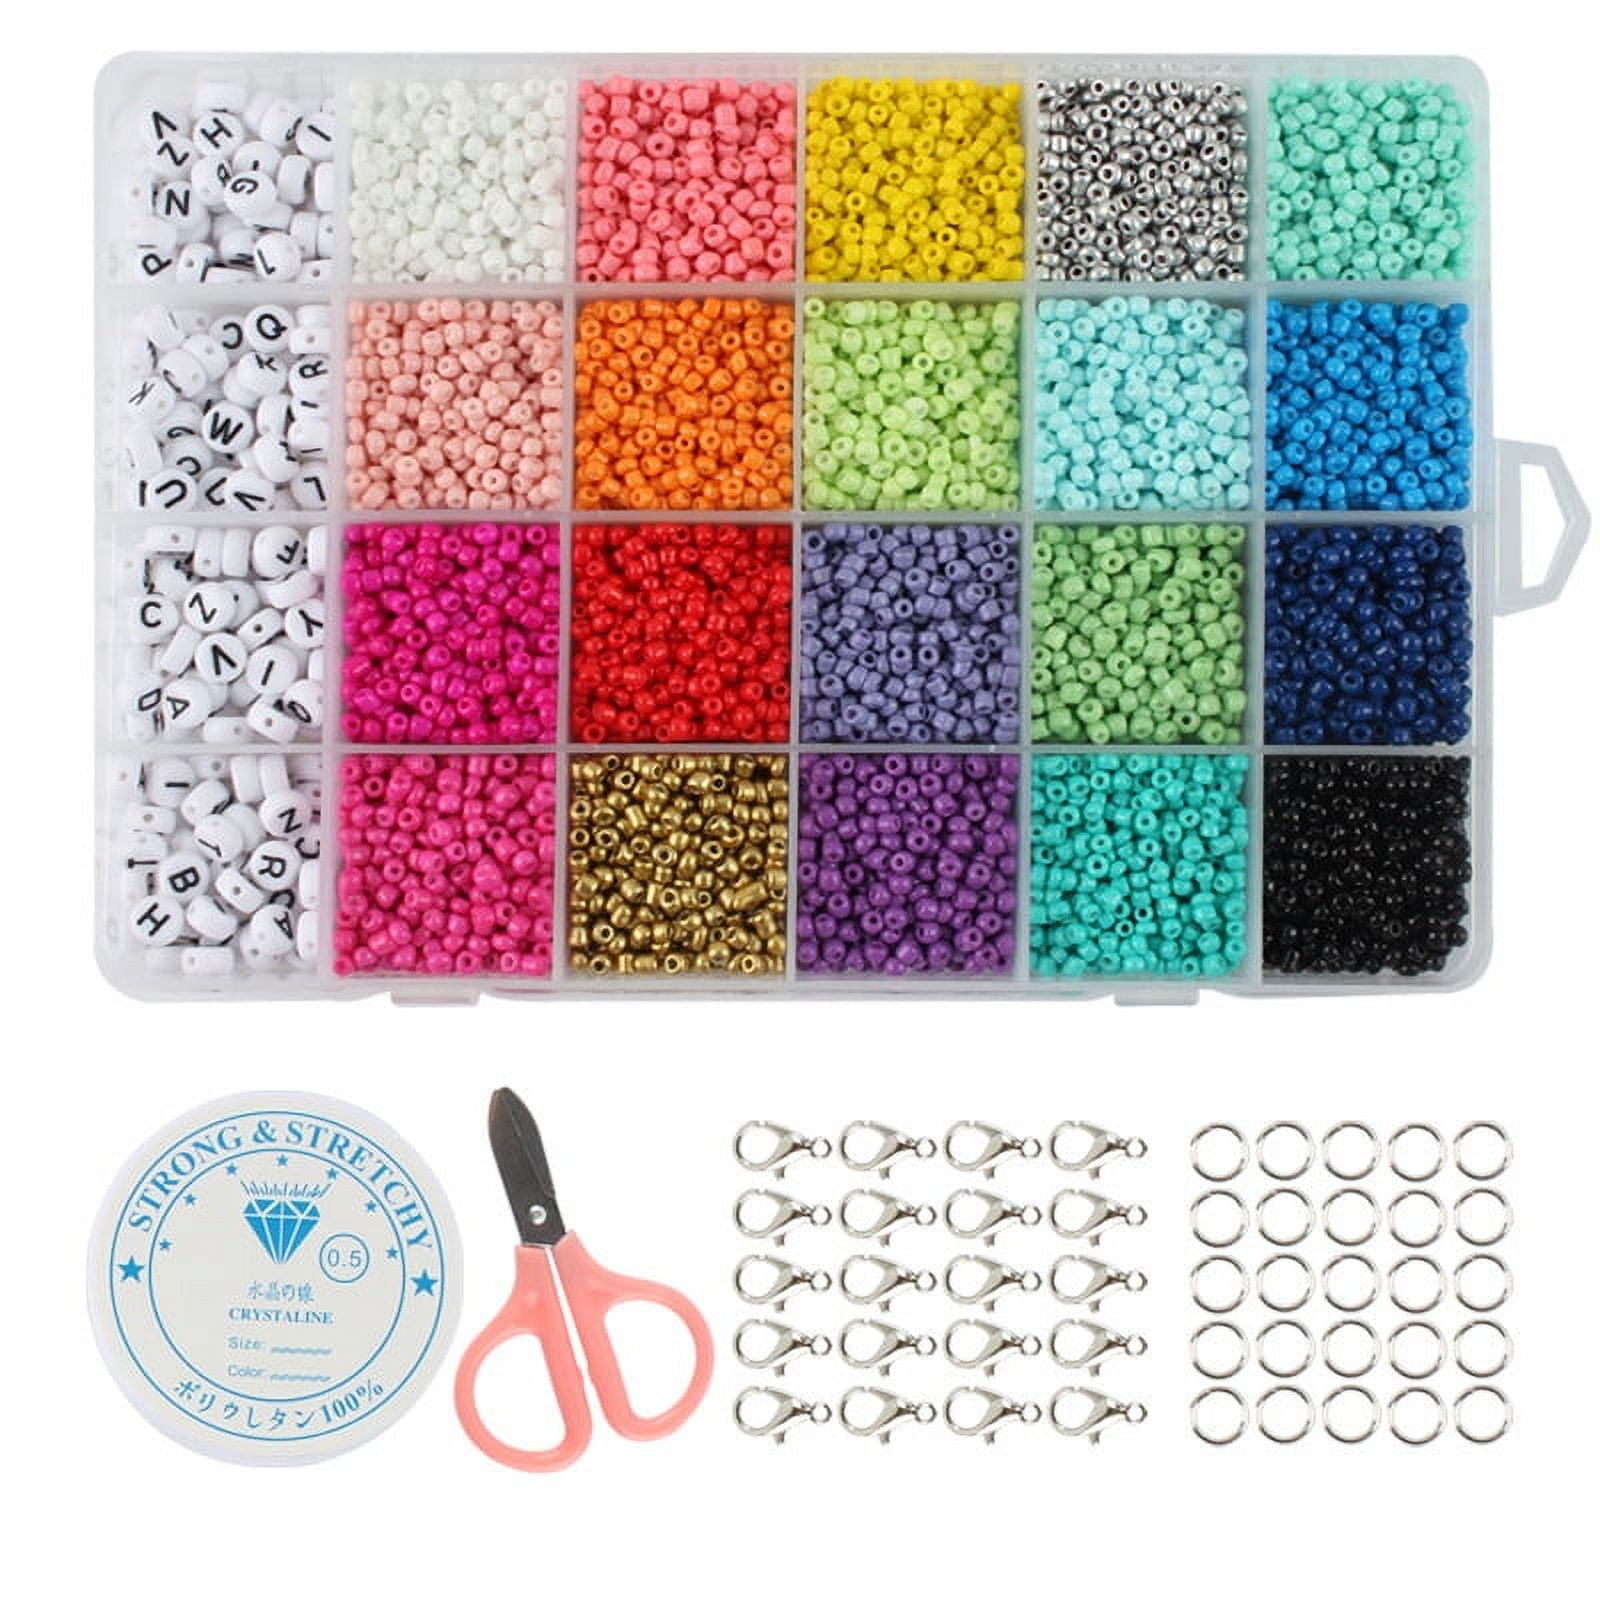 Waist beads kits, 3mm, 15 colors 